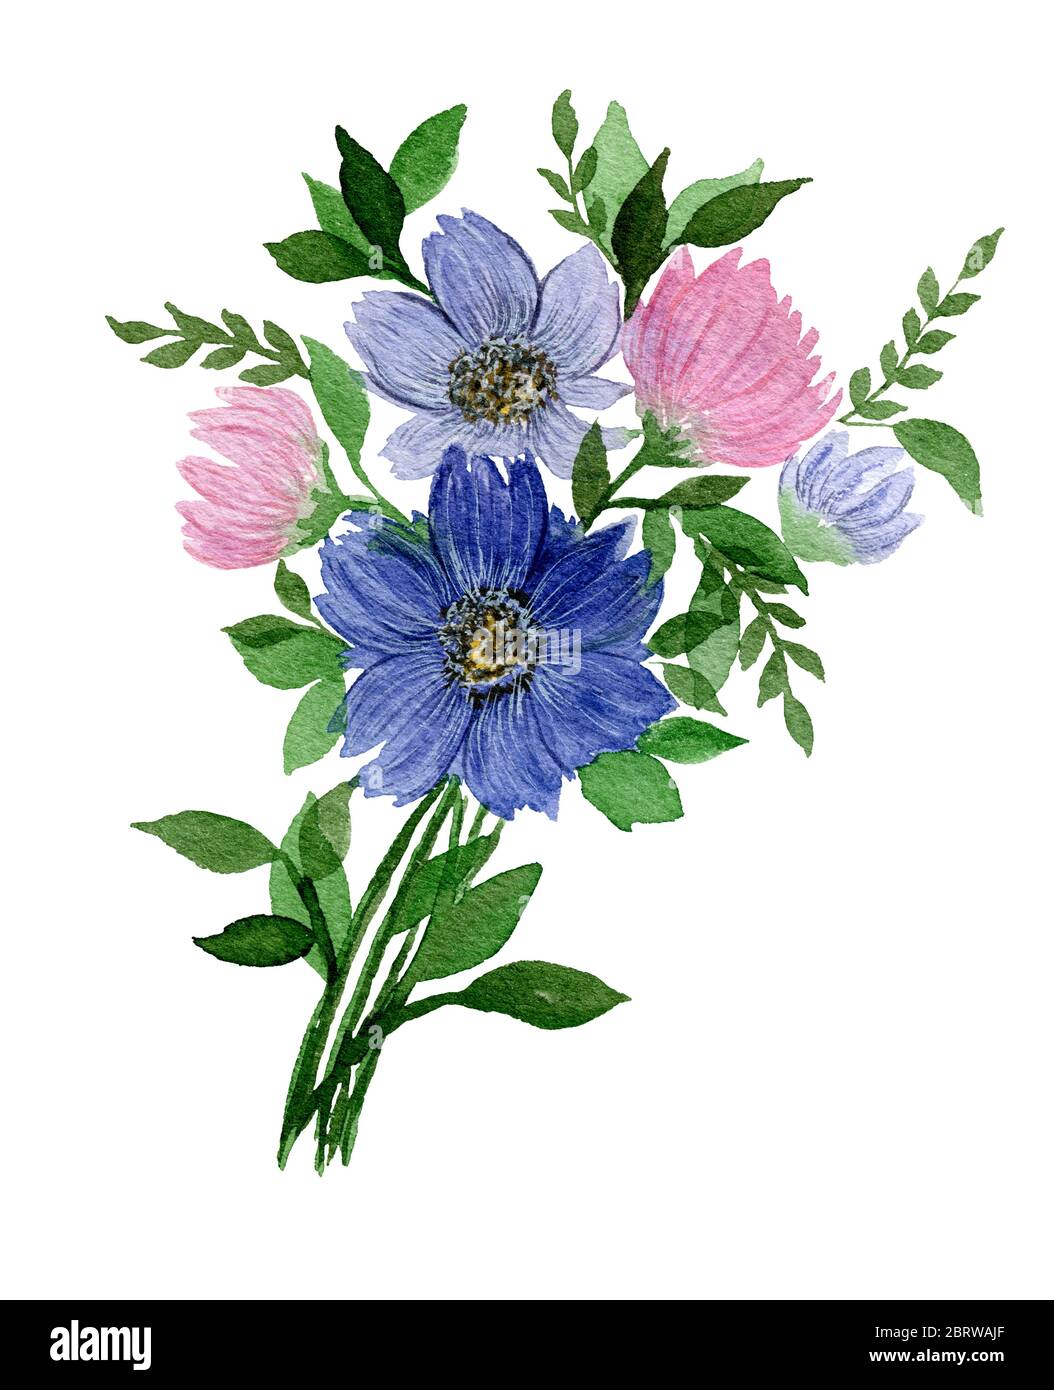 ramo de flores silvestres de primavera aisladas sobre blanco, ilustración  de acuarela botánica con flores azules y rosadas Fotografía de stock - Alamy